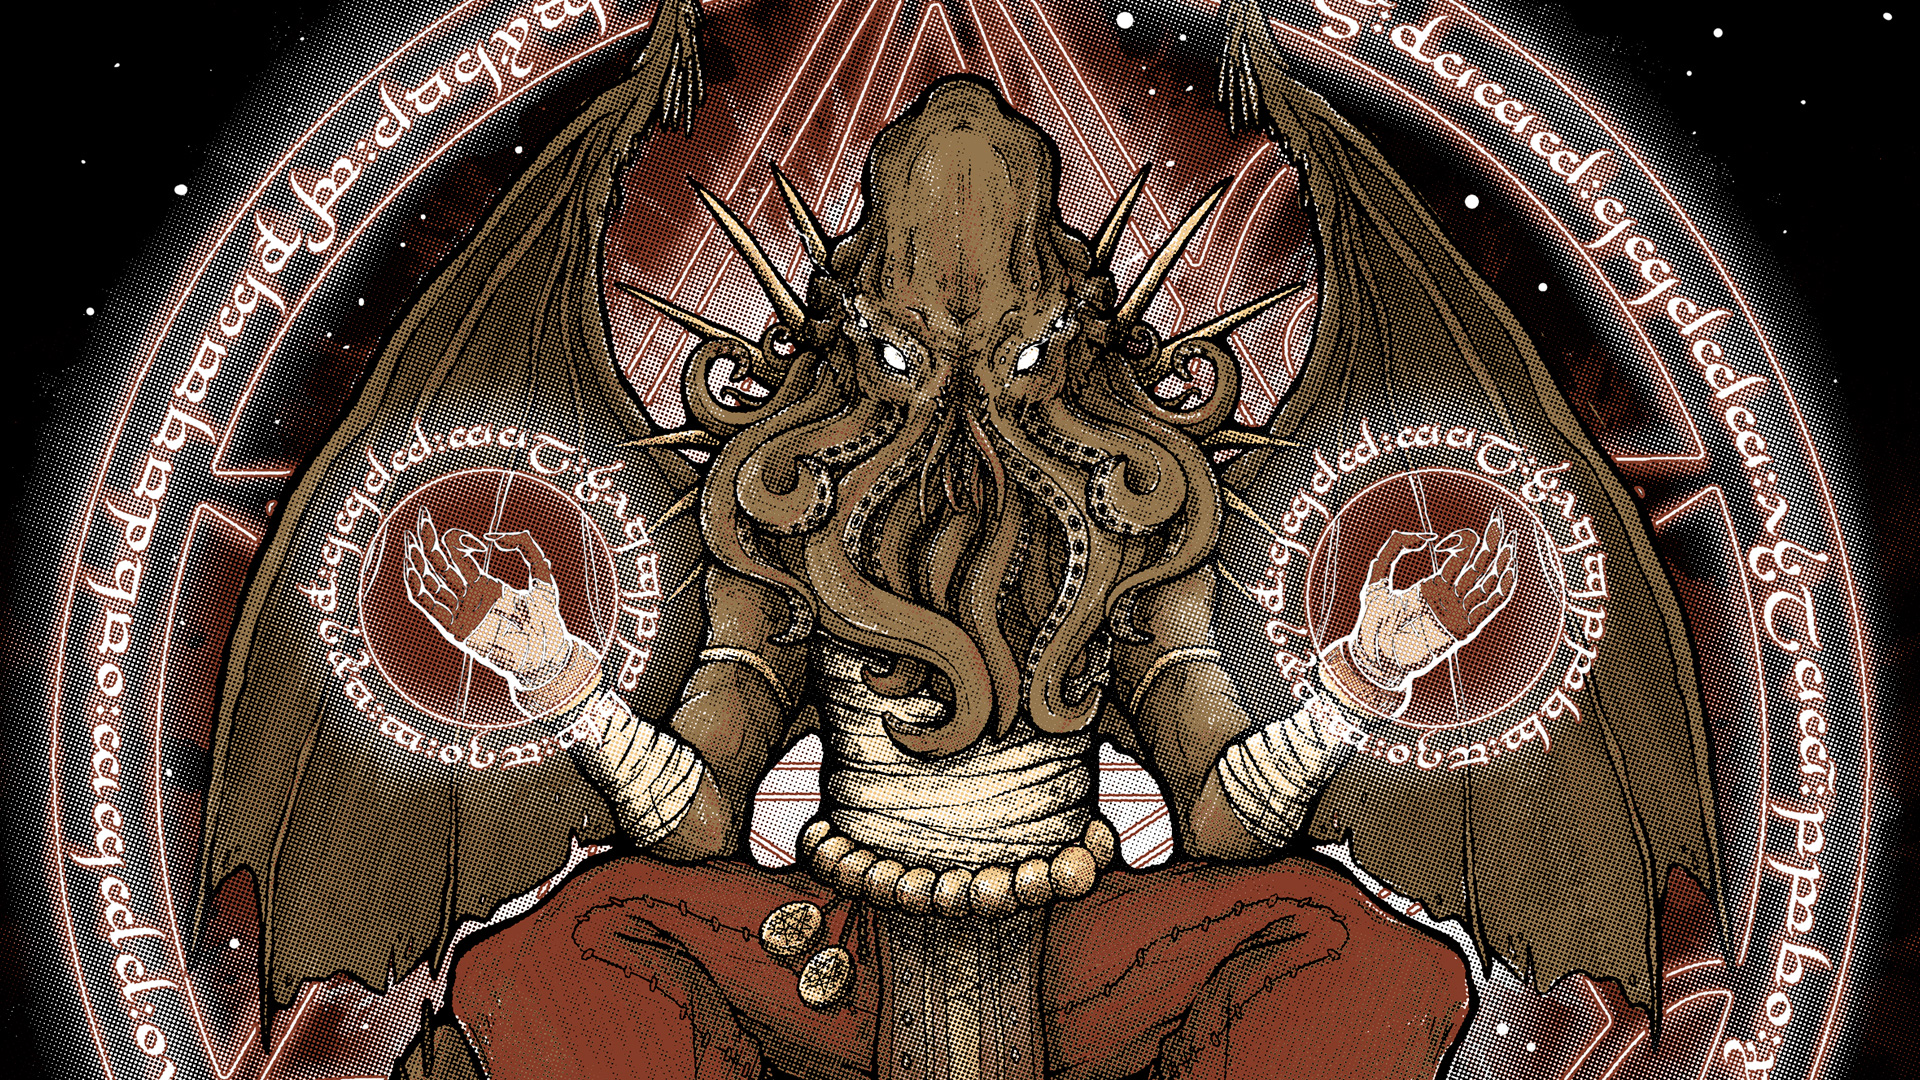 General 1920x1080 Cthulhu horror H. P. Lovecraft creature digital art